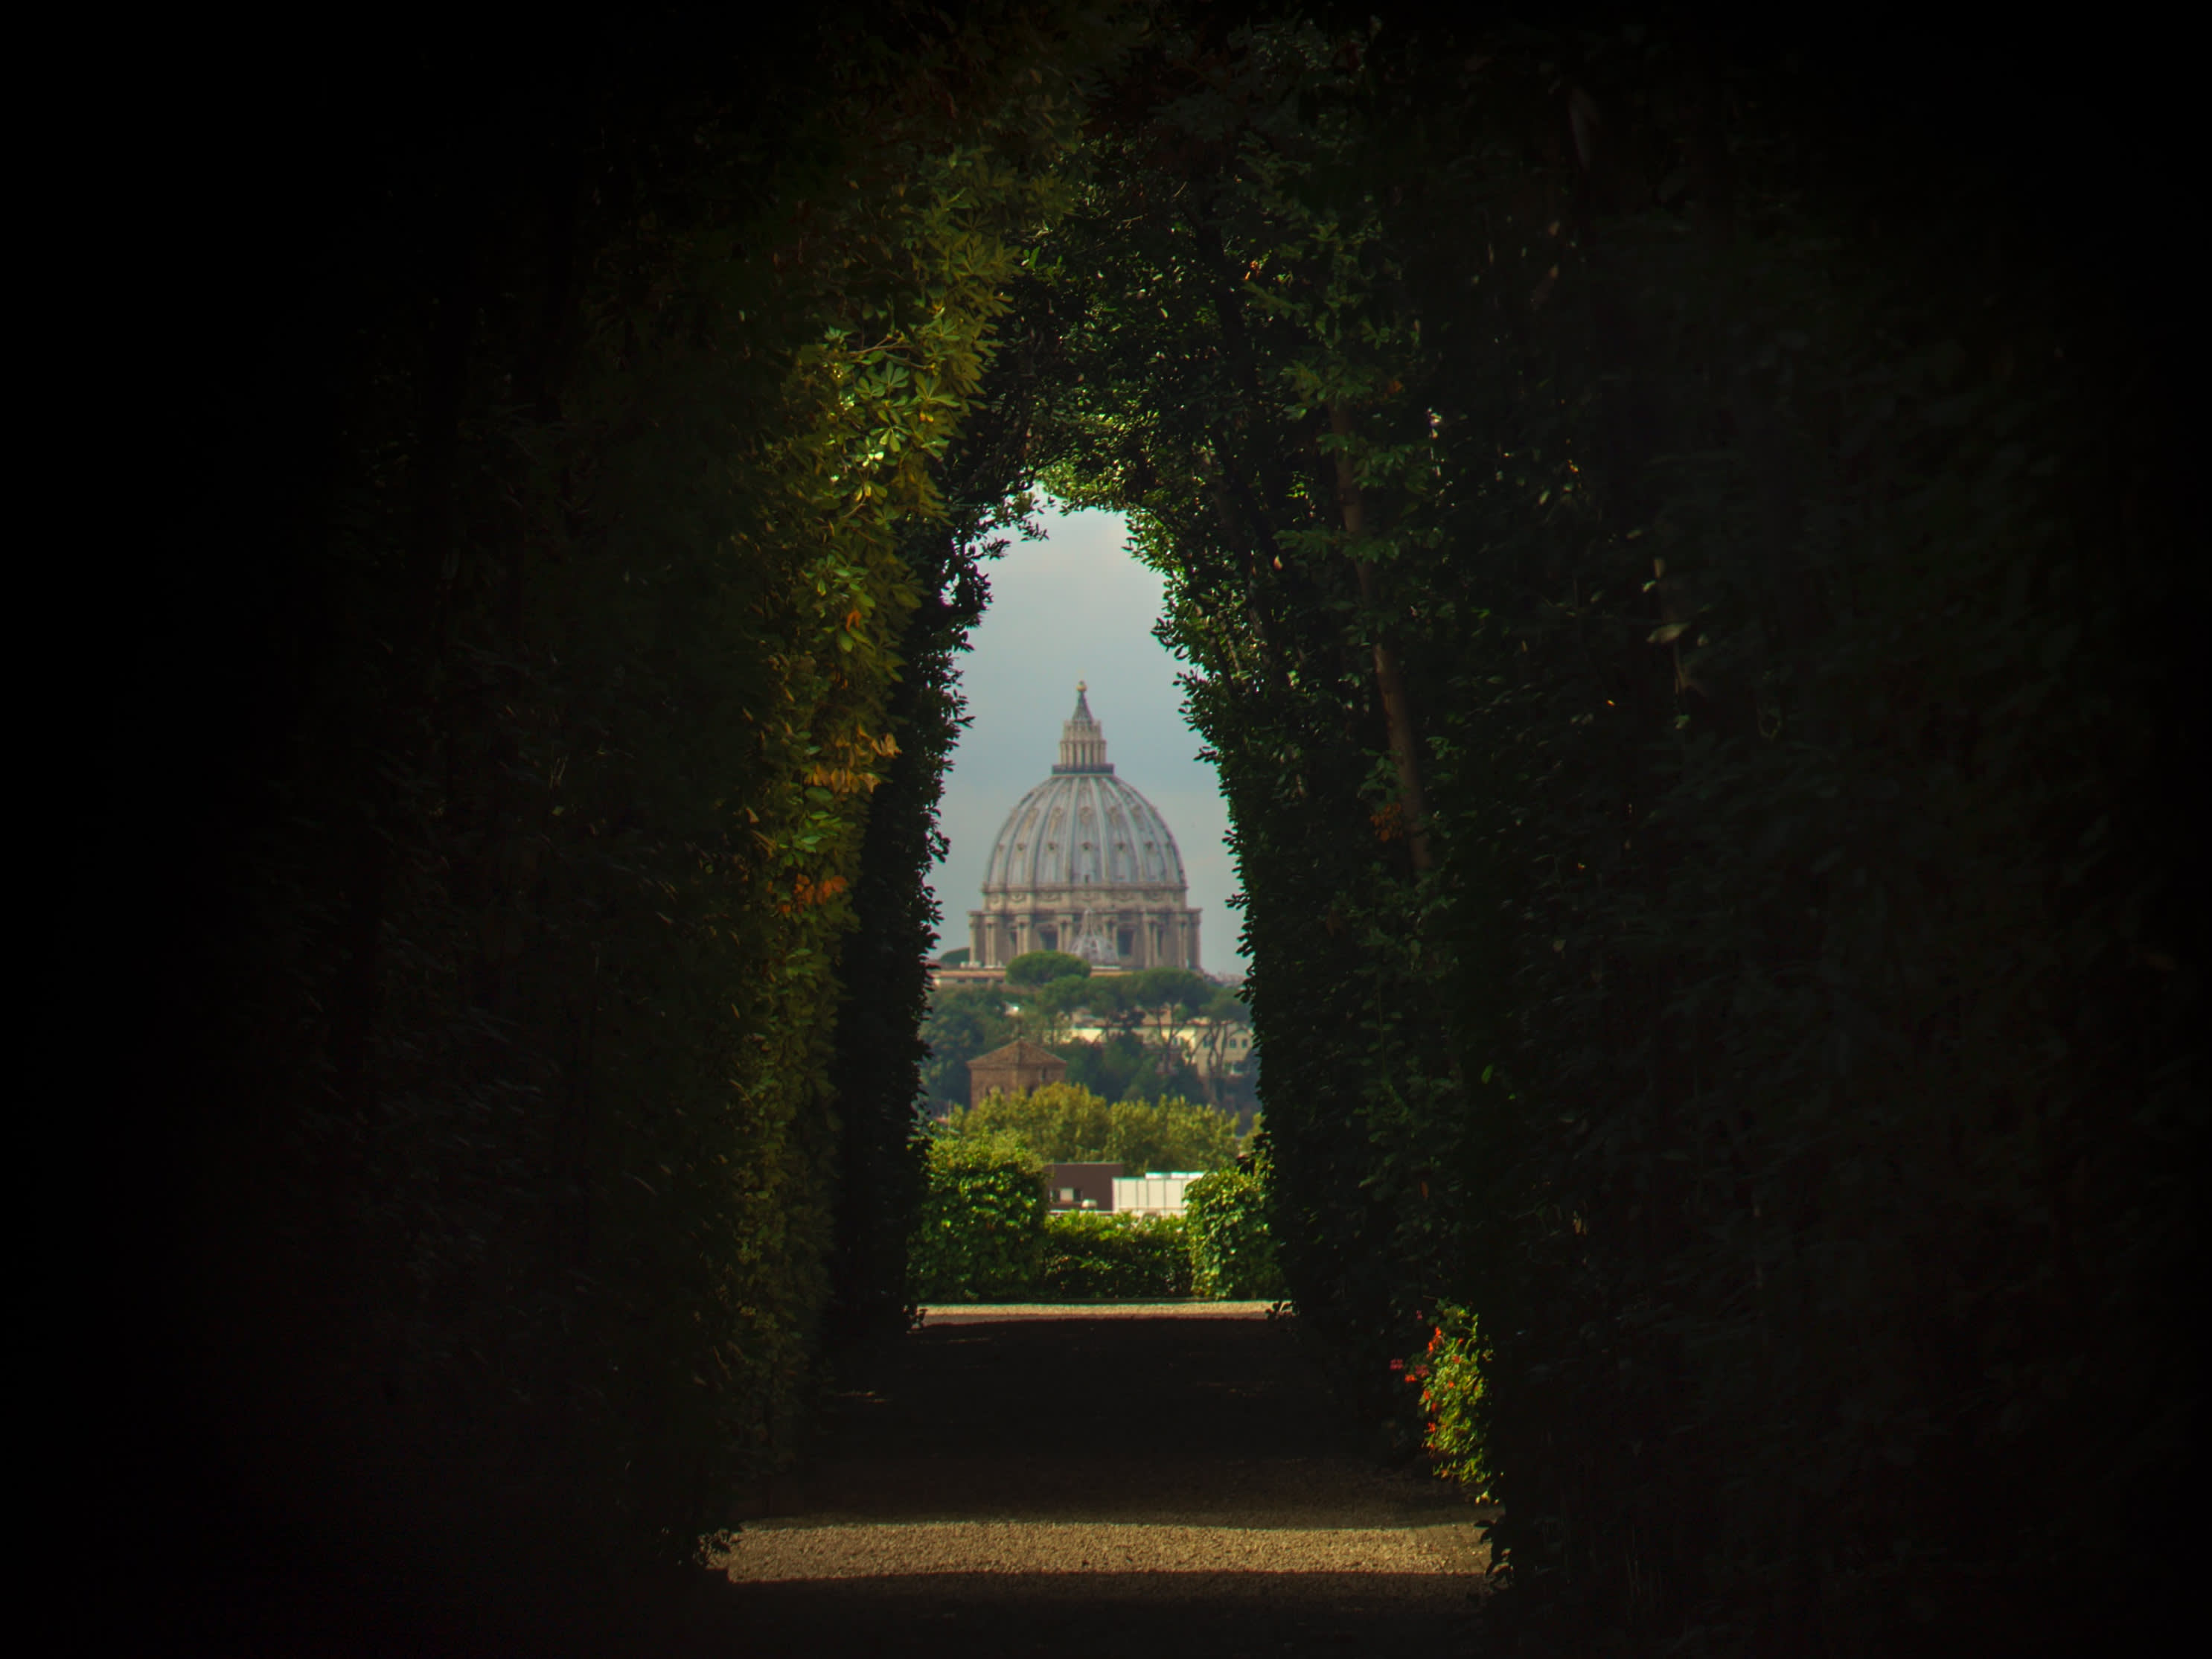 A view into Rome